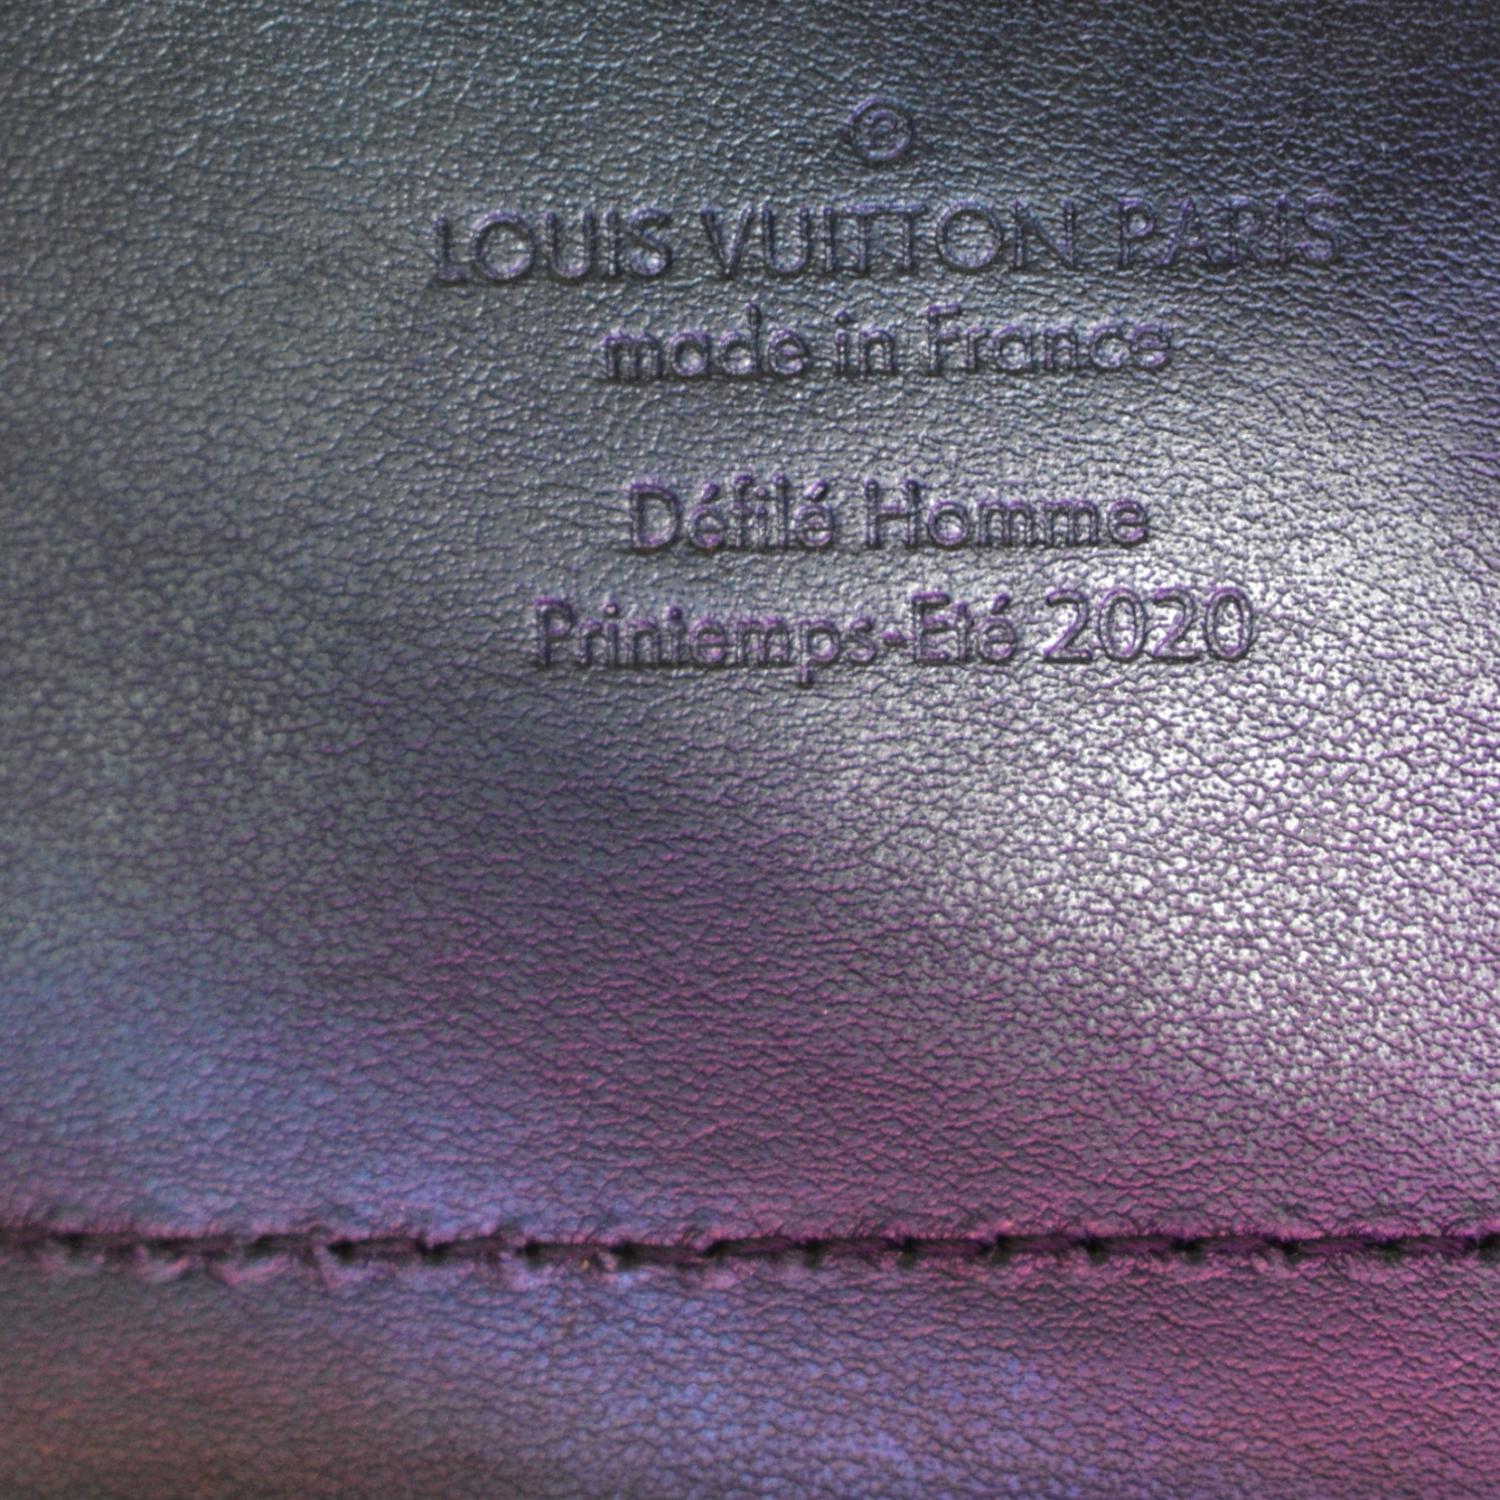 Louis Vuitton Soft Trunk Monogram Prism Shoulder Bag Black